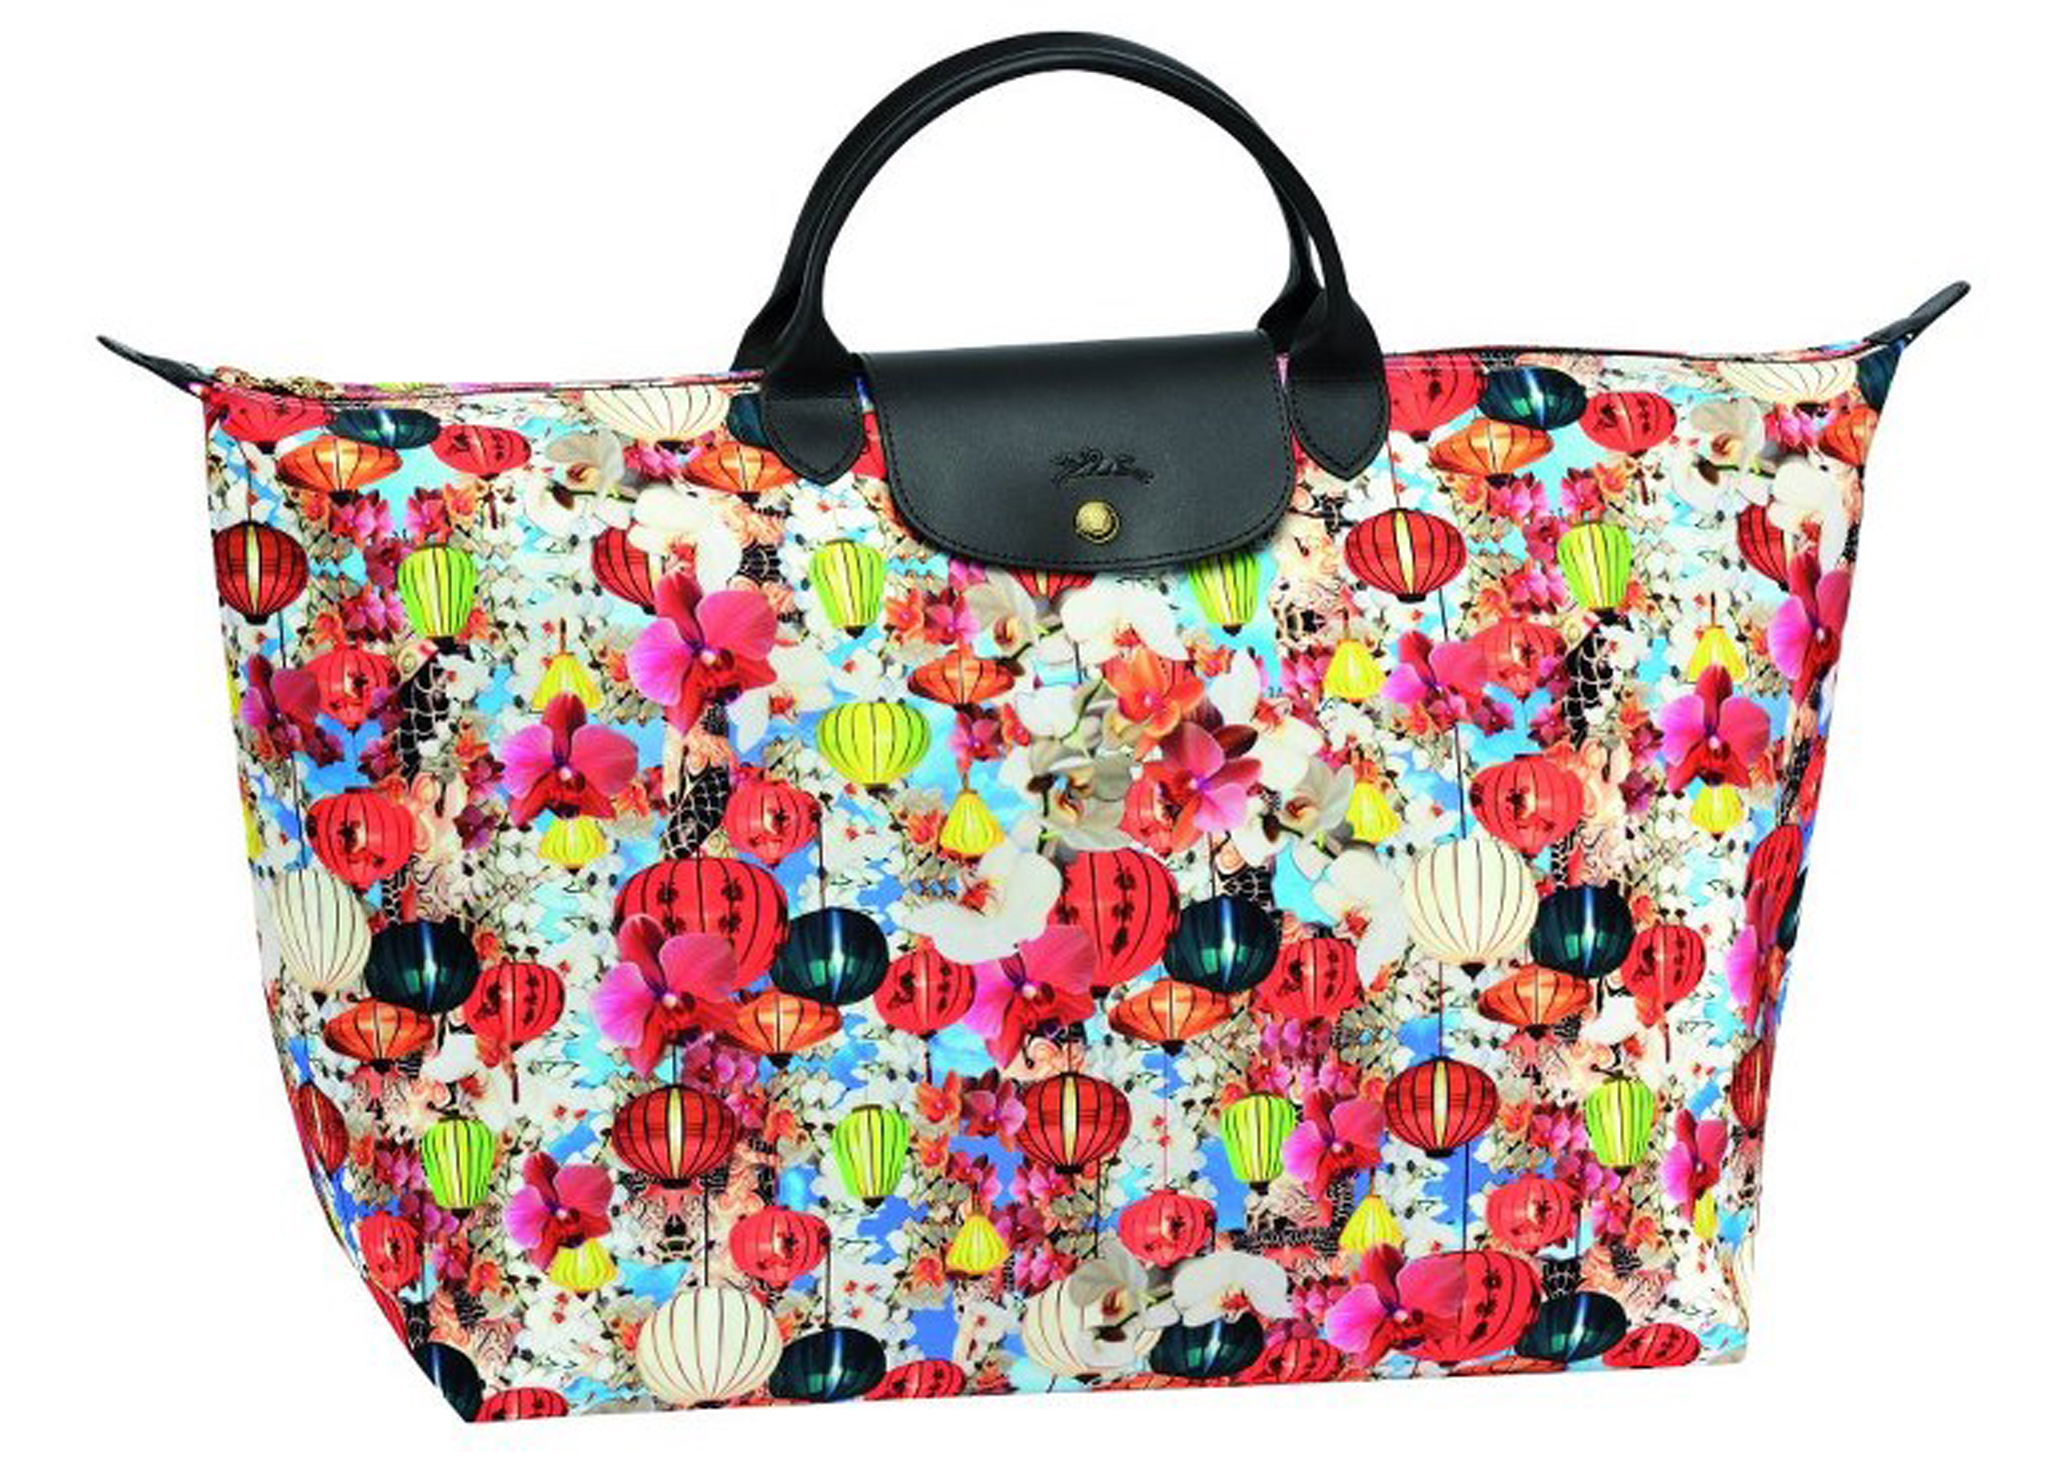 Longchamp Floral Tote Bags